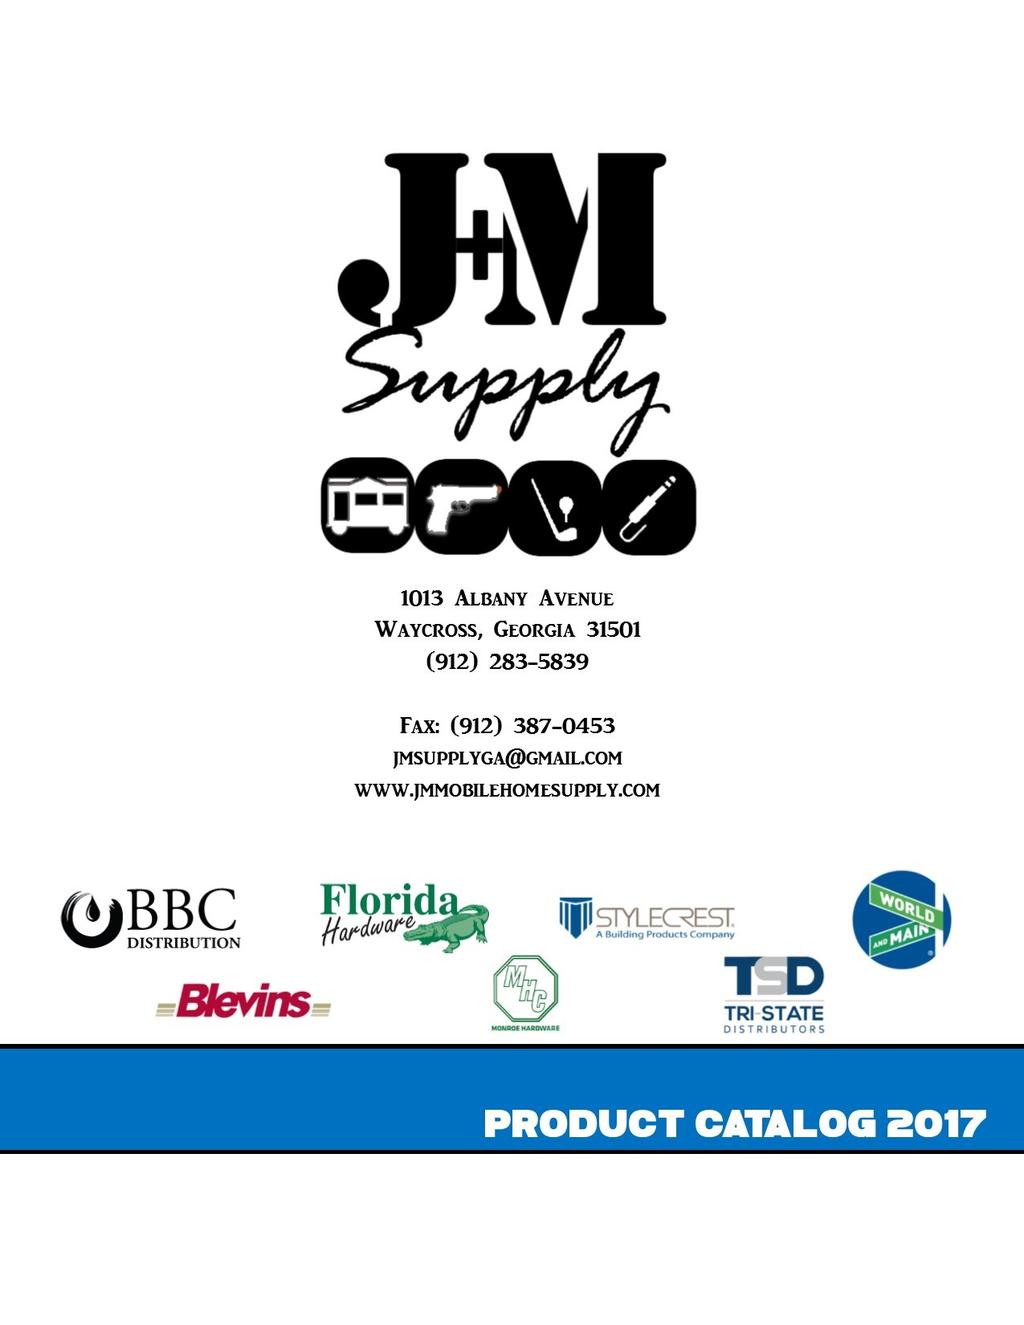 J&M Mobile Home Supply (912)